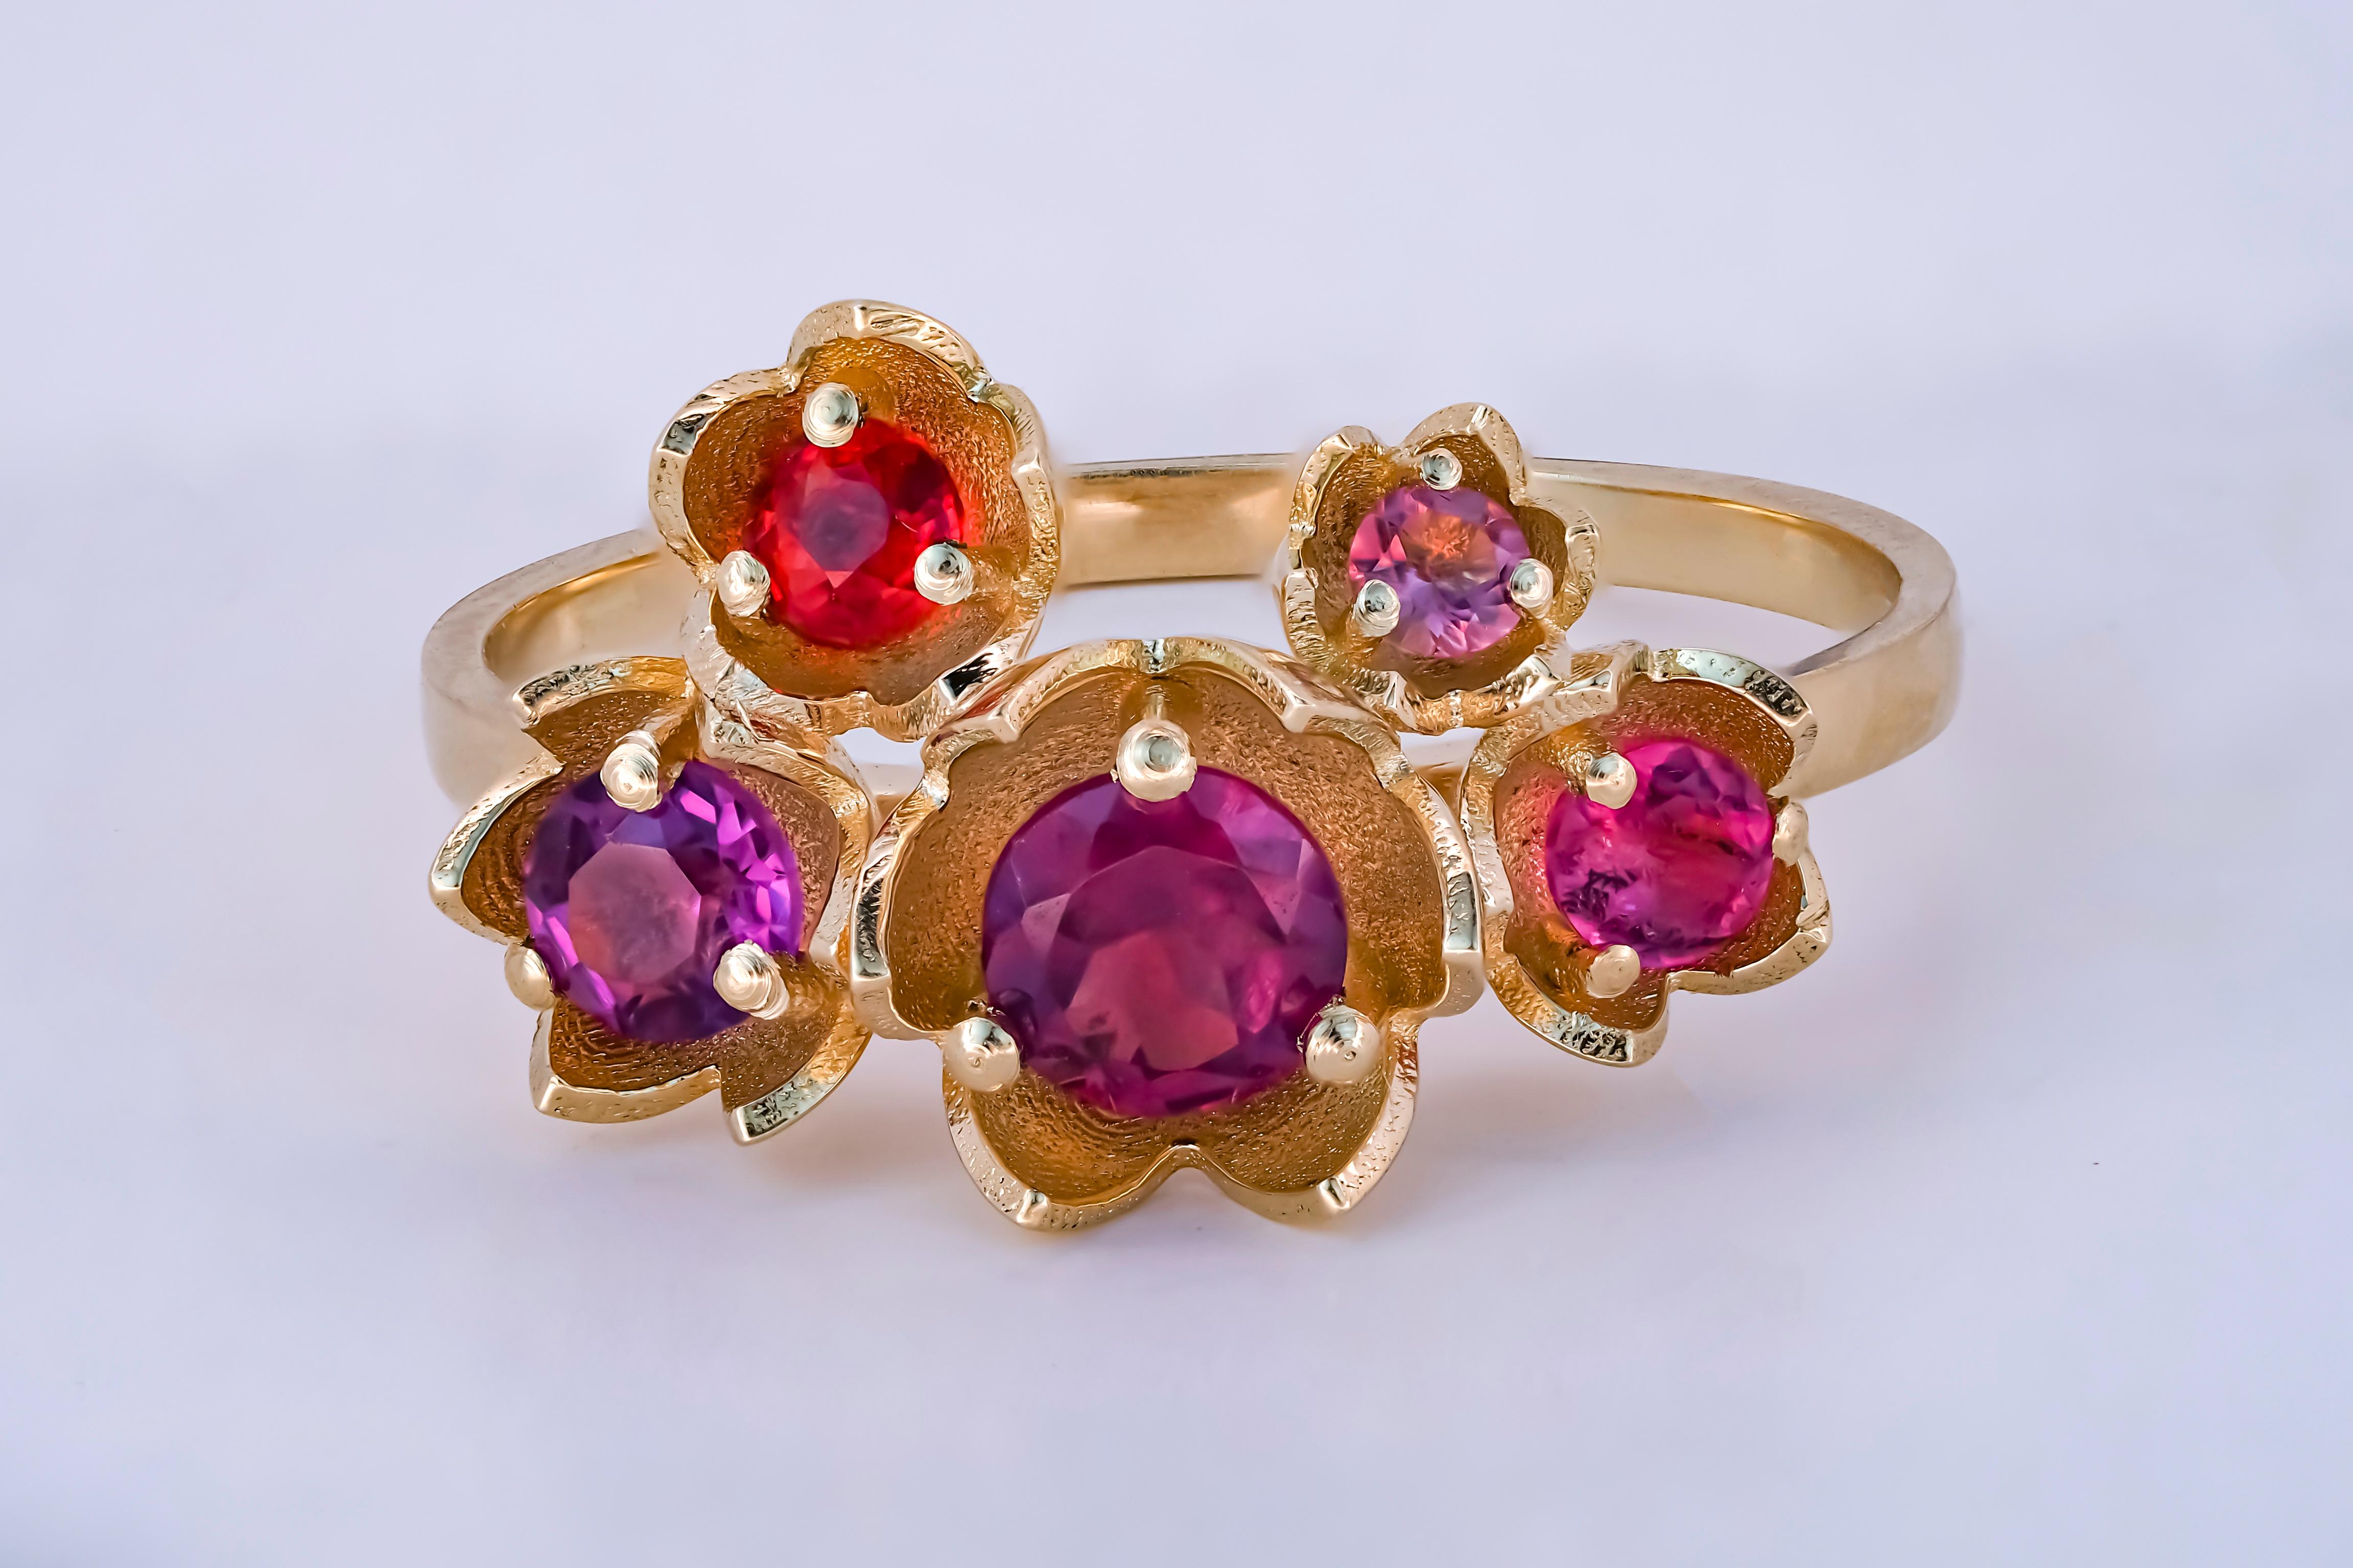 Modern 14 Karat Gold Blossom Ring with Multicolored Gemstones, Pink Tourmaline Ring